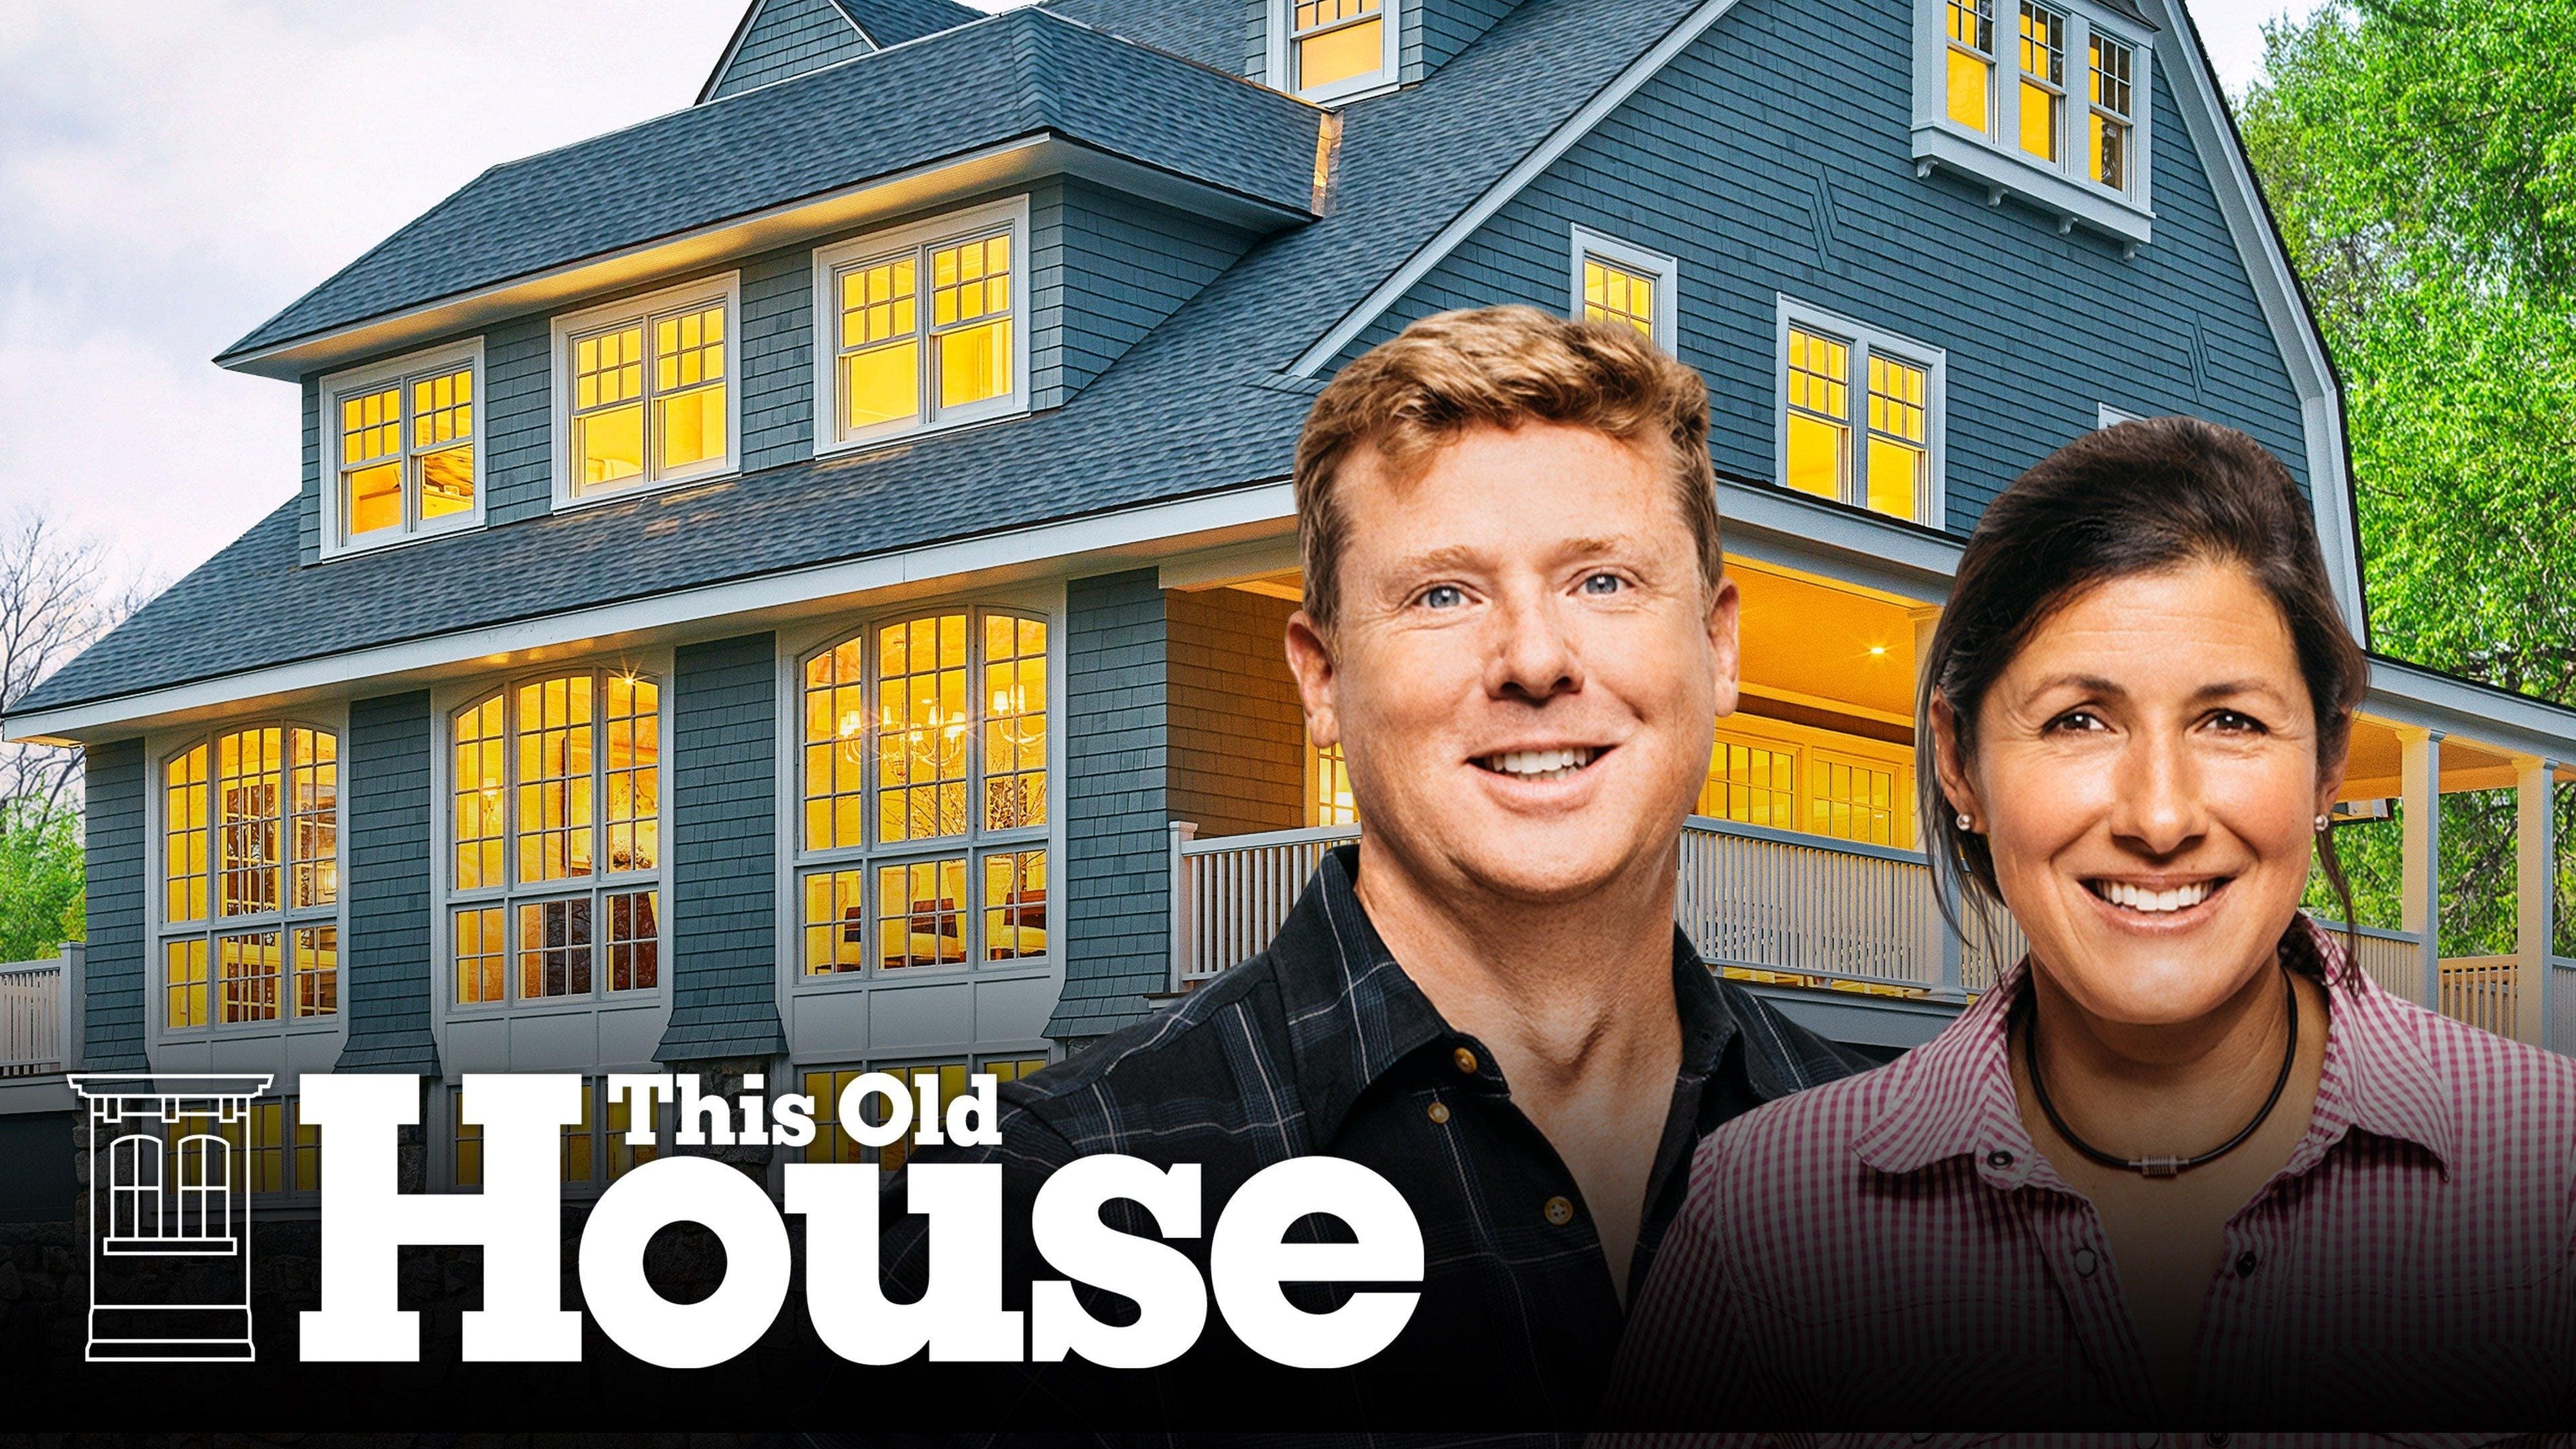 This Old House - Season 45 Episode 18